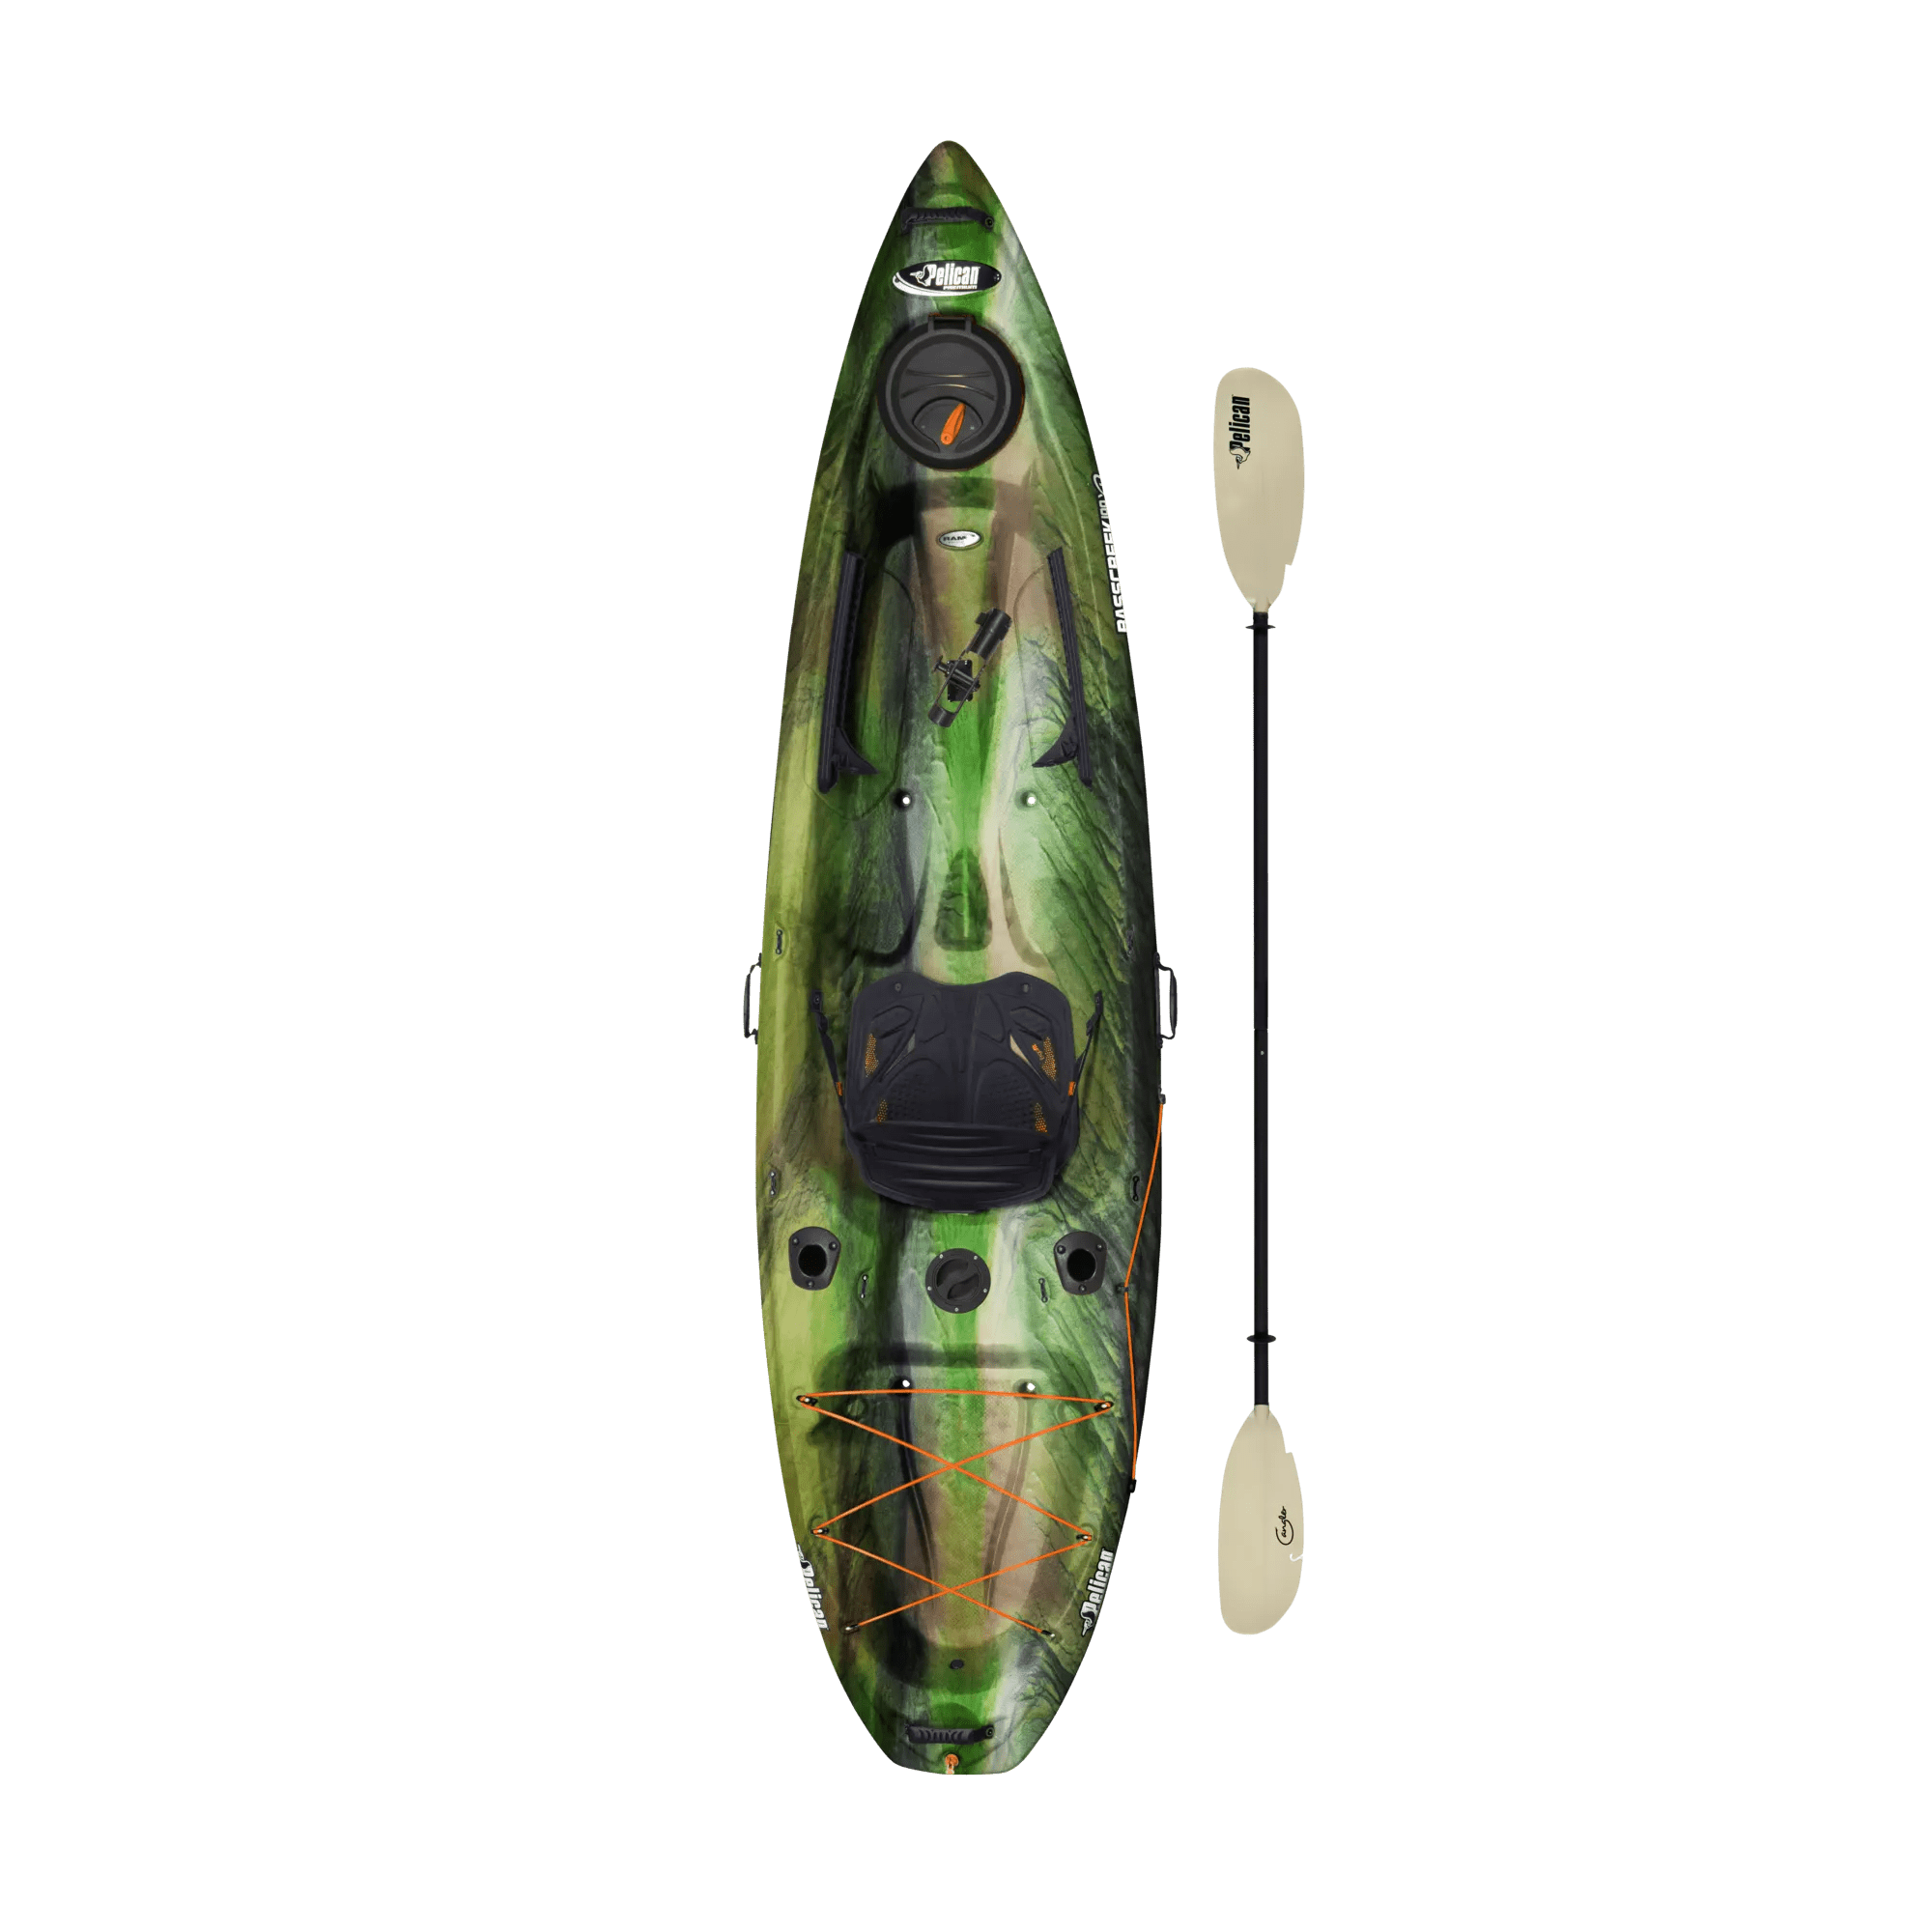 PELICAN - Basscreek 100XP Angler Fishing Kayak - Grey - KWP10P100-00 - TOP